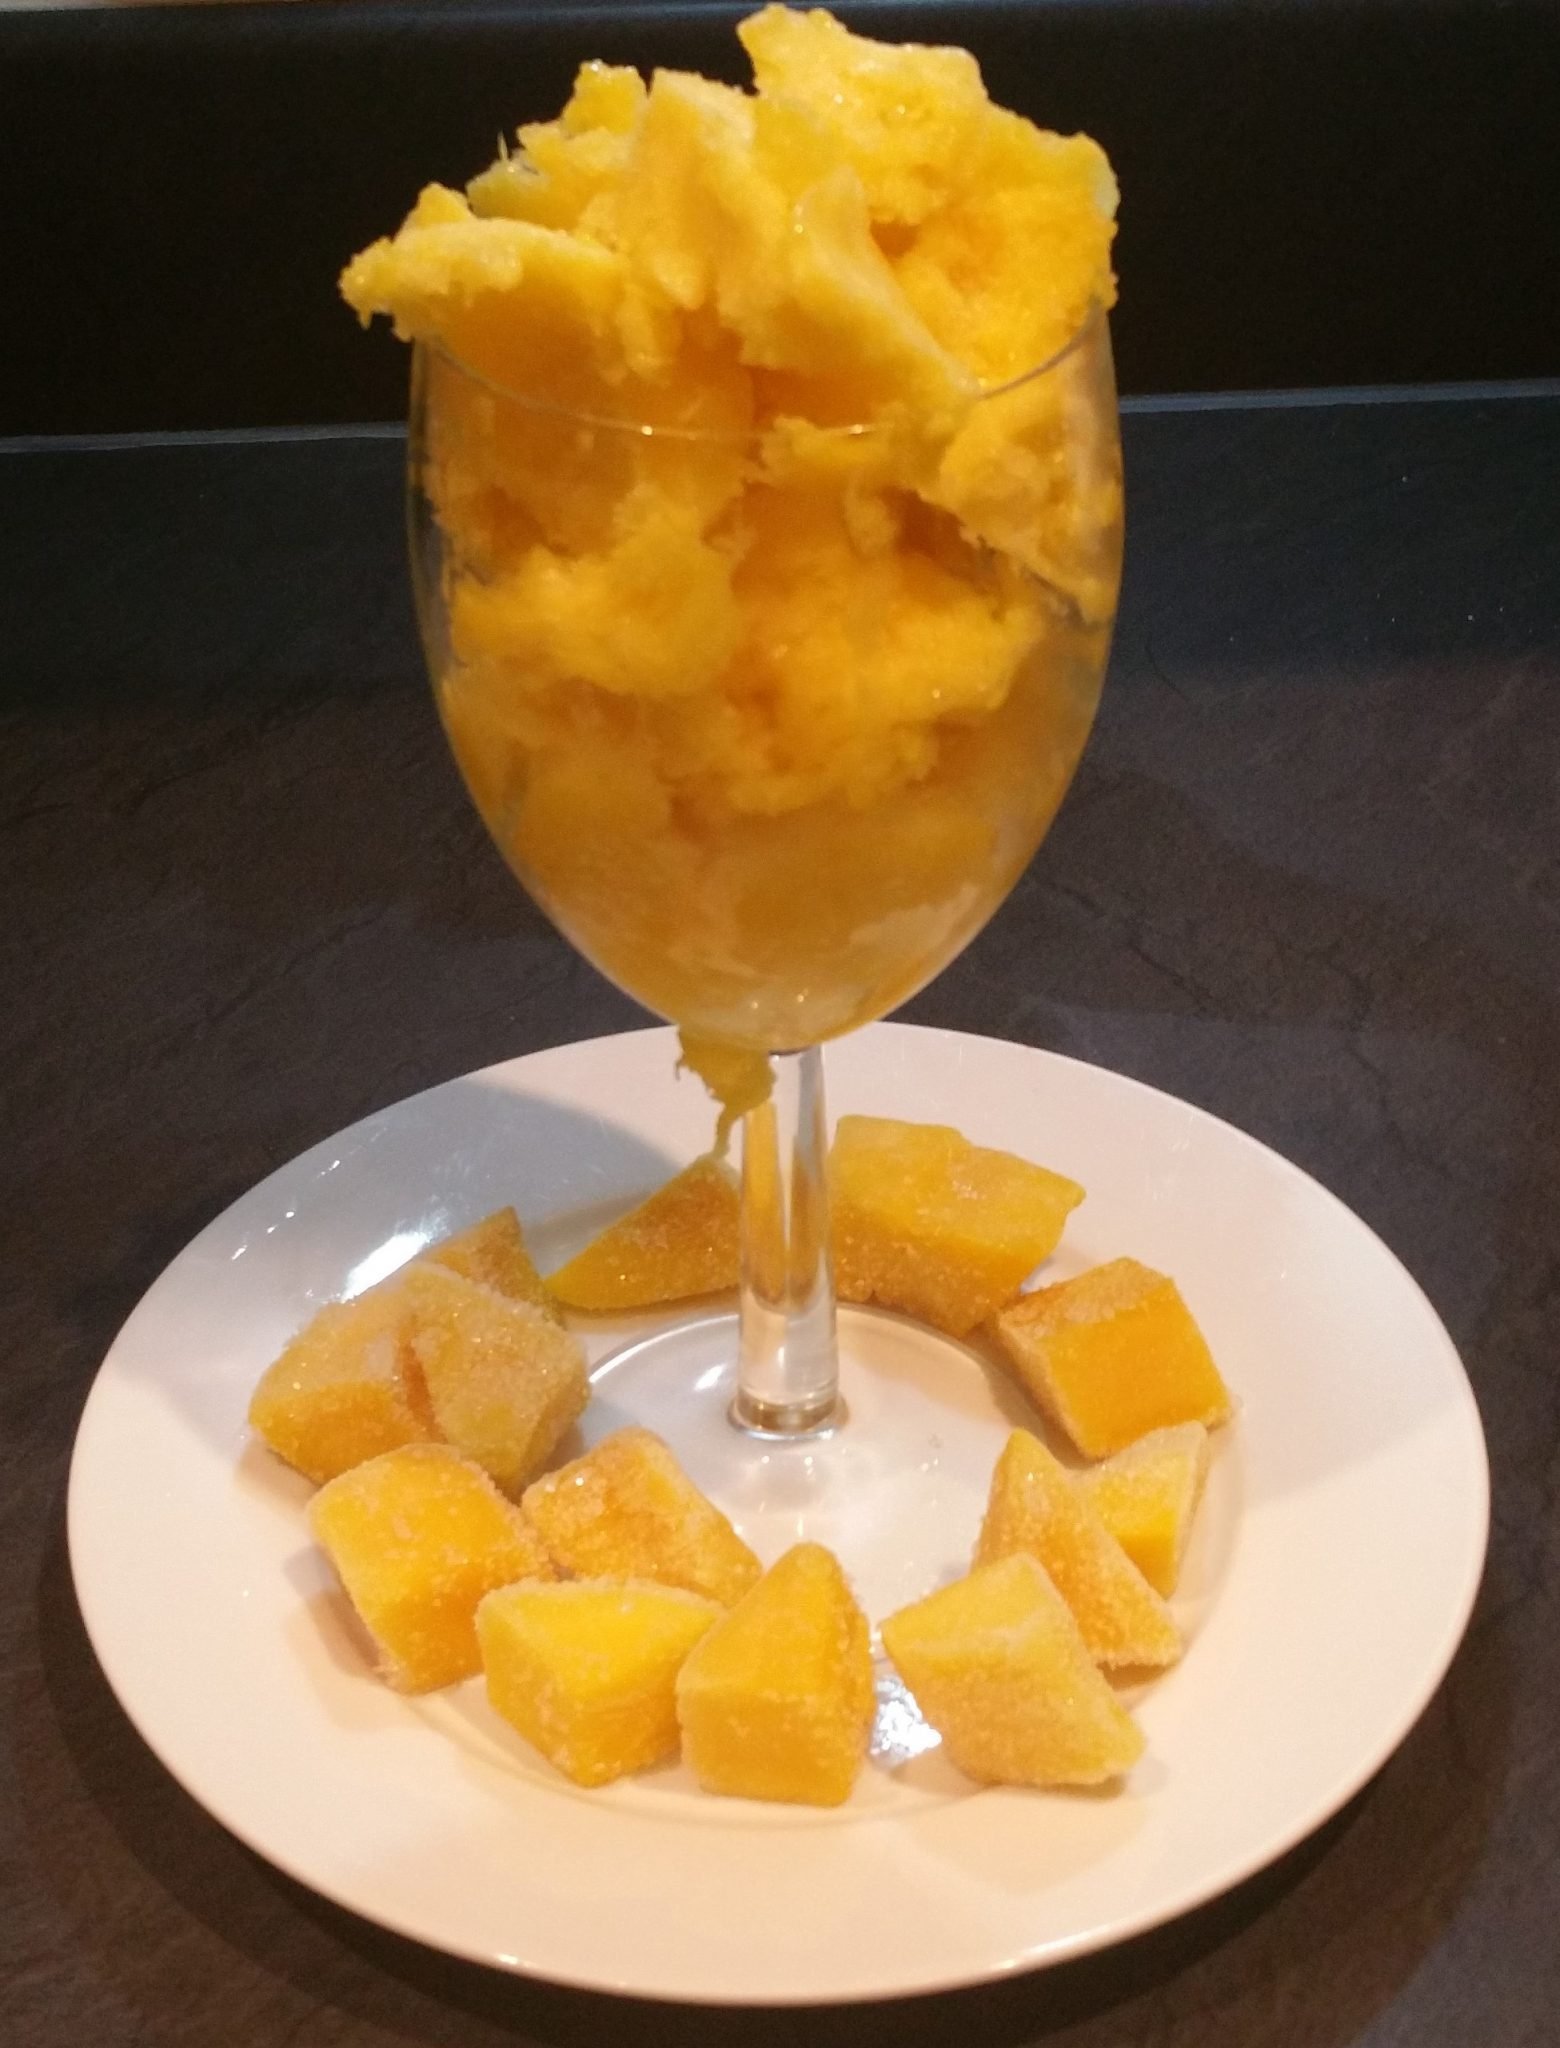 Mango and orange sorbet final